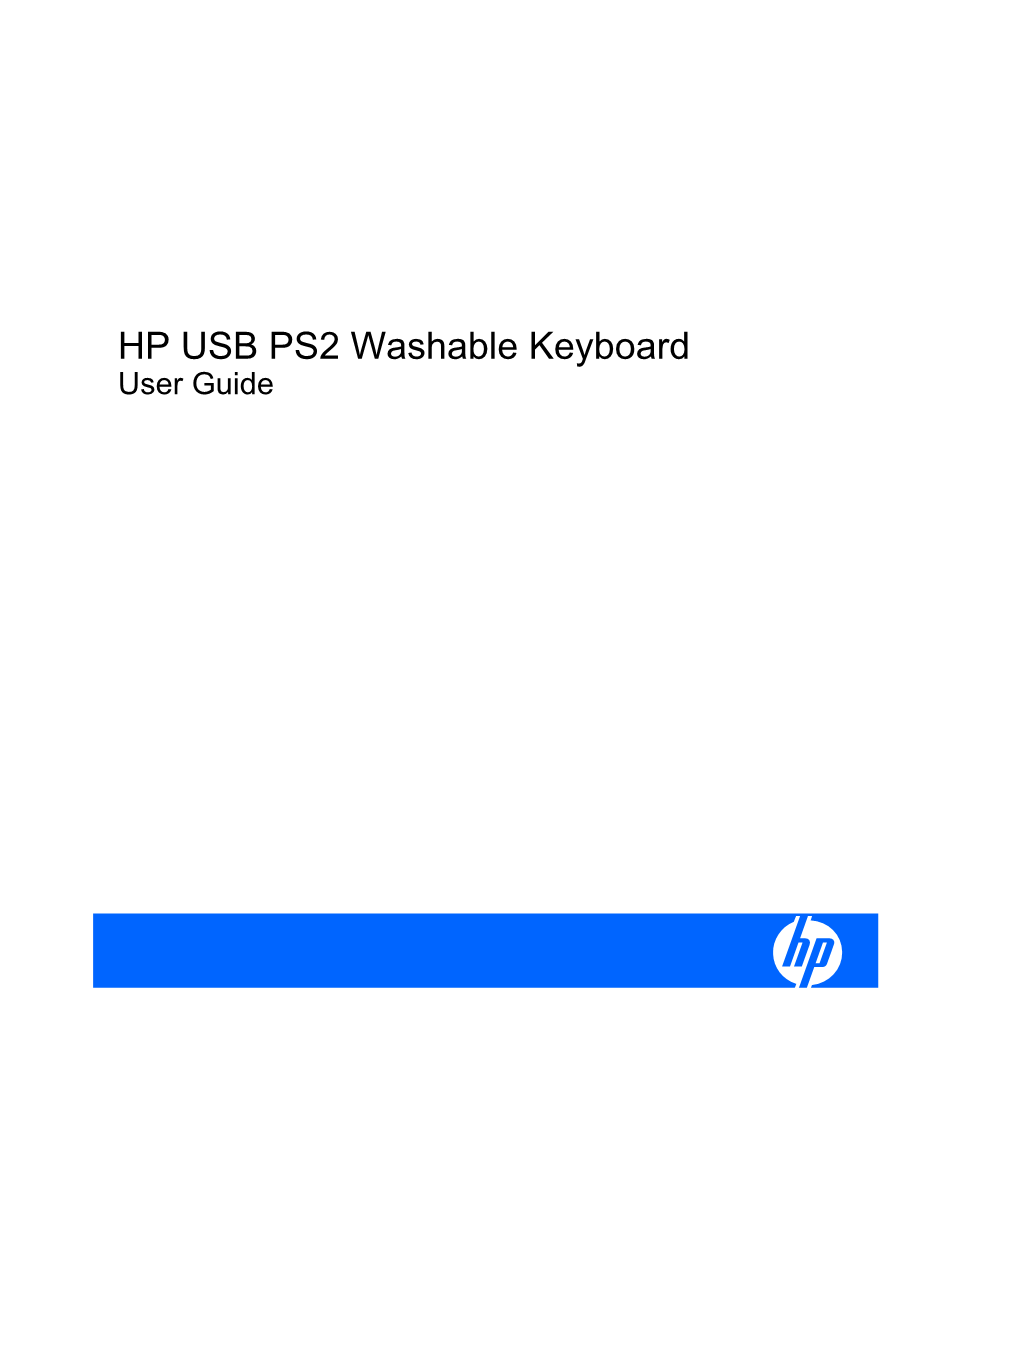 HP USB PS2 Washable Keyboard User Guide © Copyright 2009 Hewlett-Packard Development Company, L.P